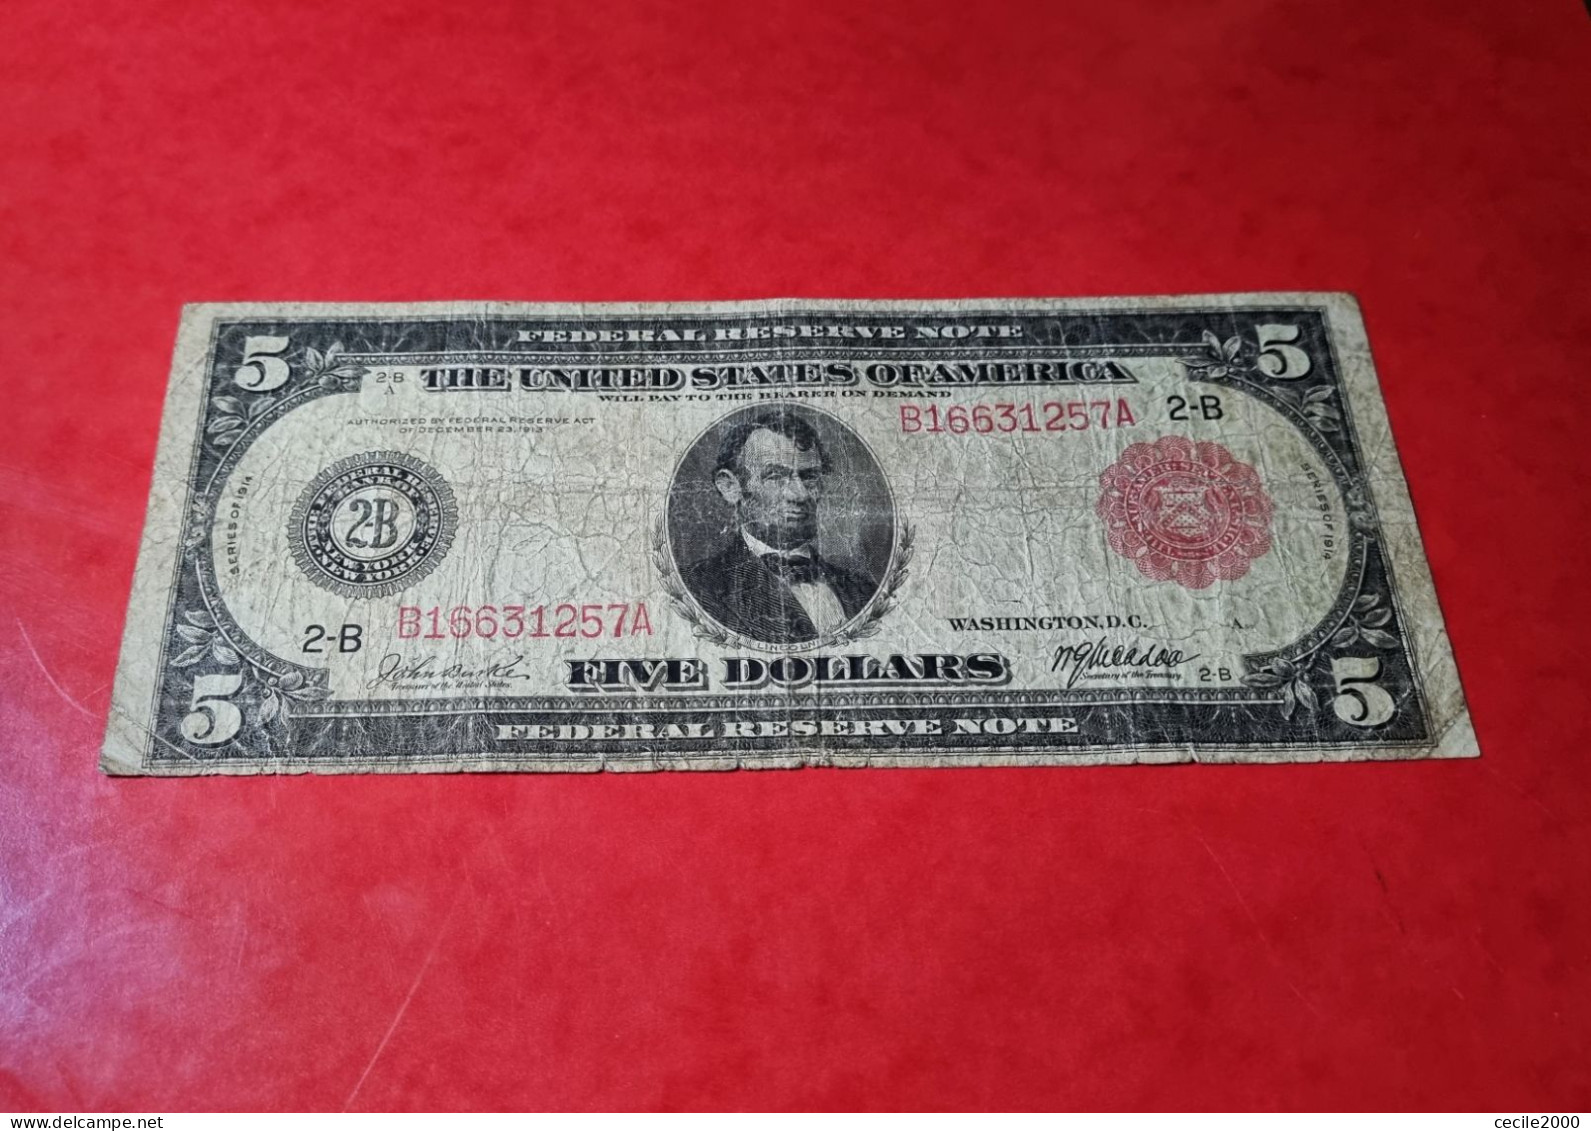 SCARCE 1914 USA $5 DOLLARS *RED SEAL* UNITED STATES BANKNOTE F BILLETE ESTADOS UNIDOS COMPRAS MULTIPLES CONSULTAR - Billets Des États-Unis (1862-1923)